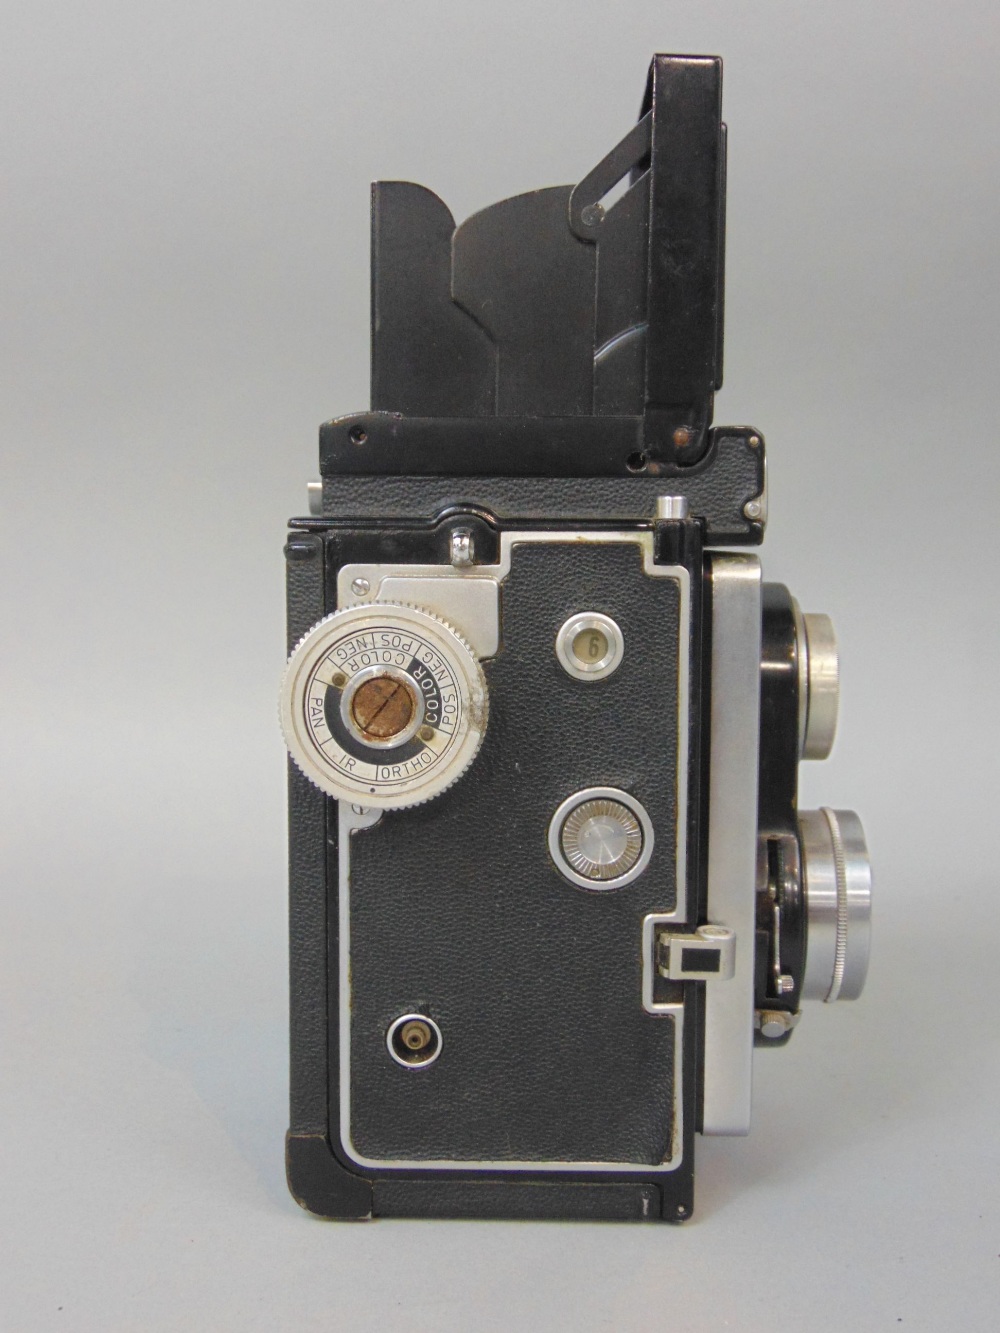 Ikoflex twin lens vintage camera with Novar-Anastigmat Teronar Anastigmat twin lens - Image 5 of 7